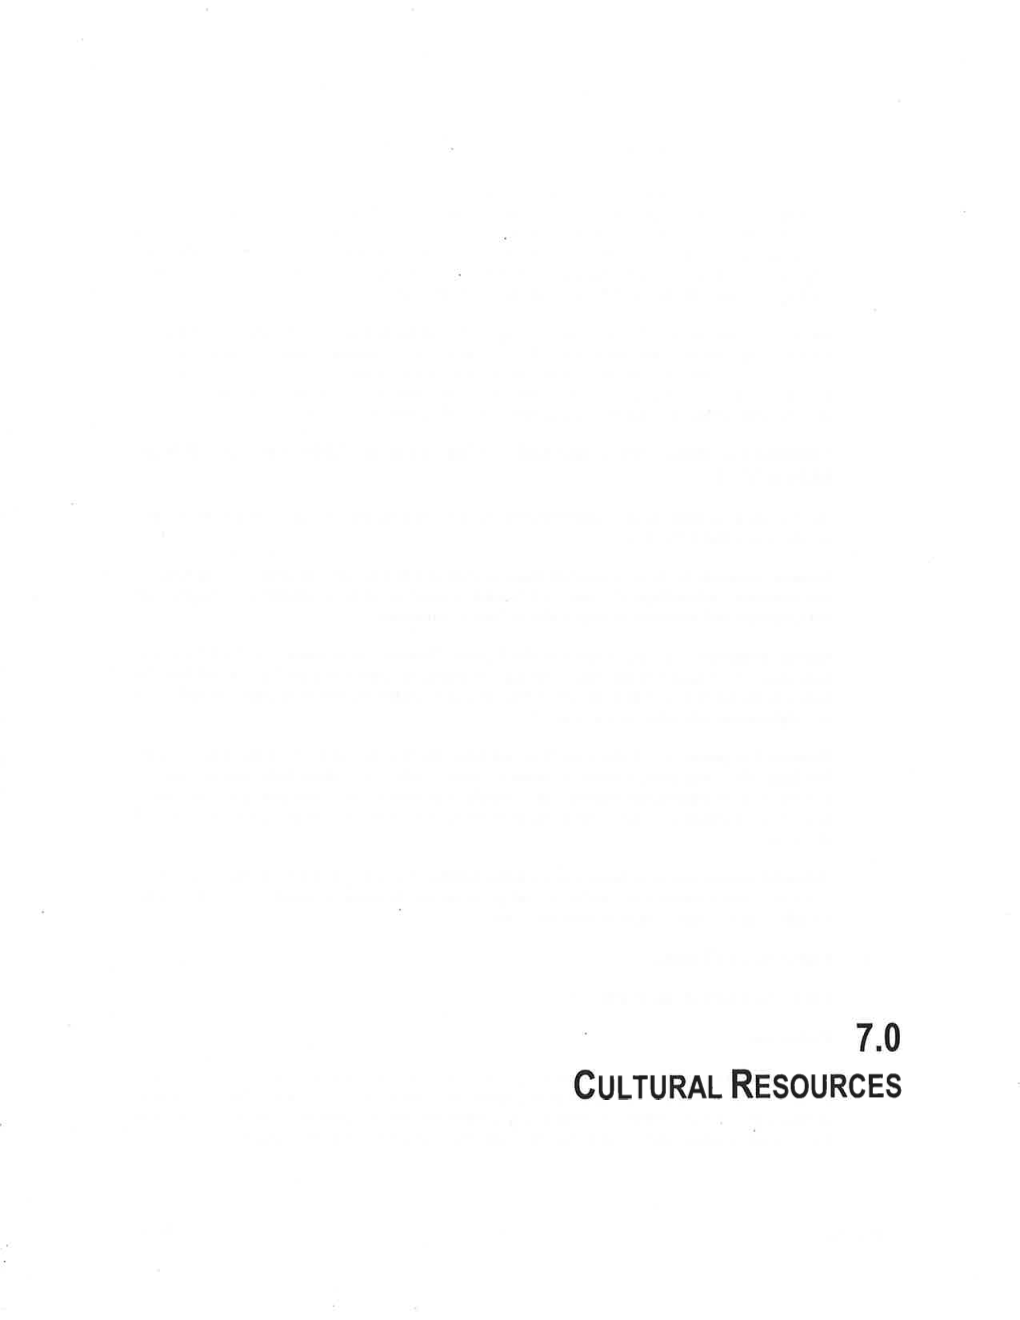 Culrural Rrsources 7.0 Cultural Resources